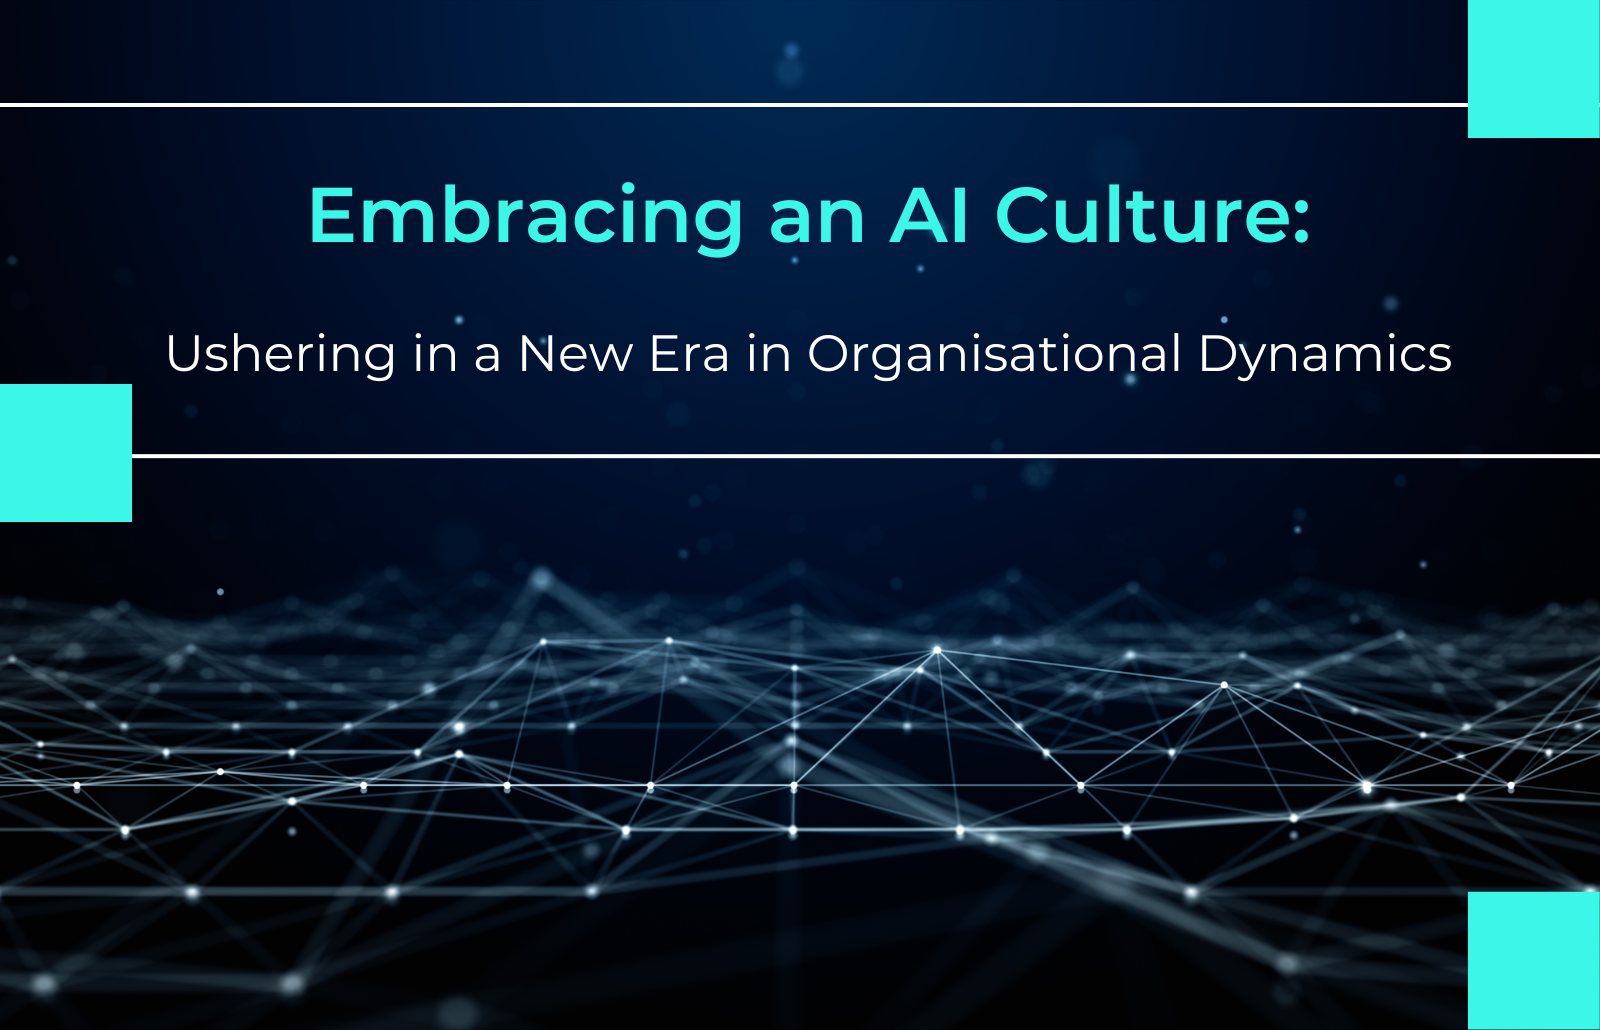 AI culture represented through network